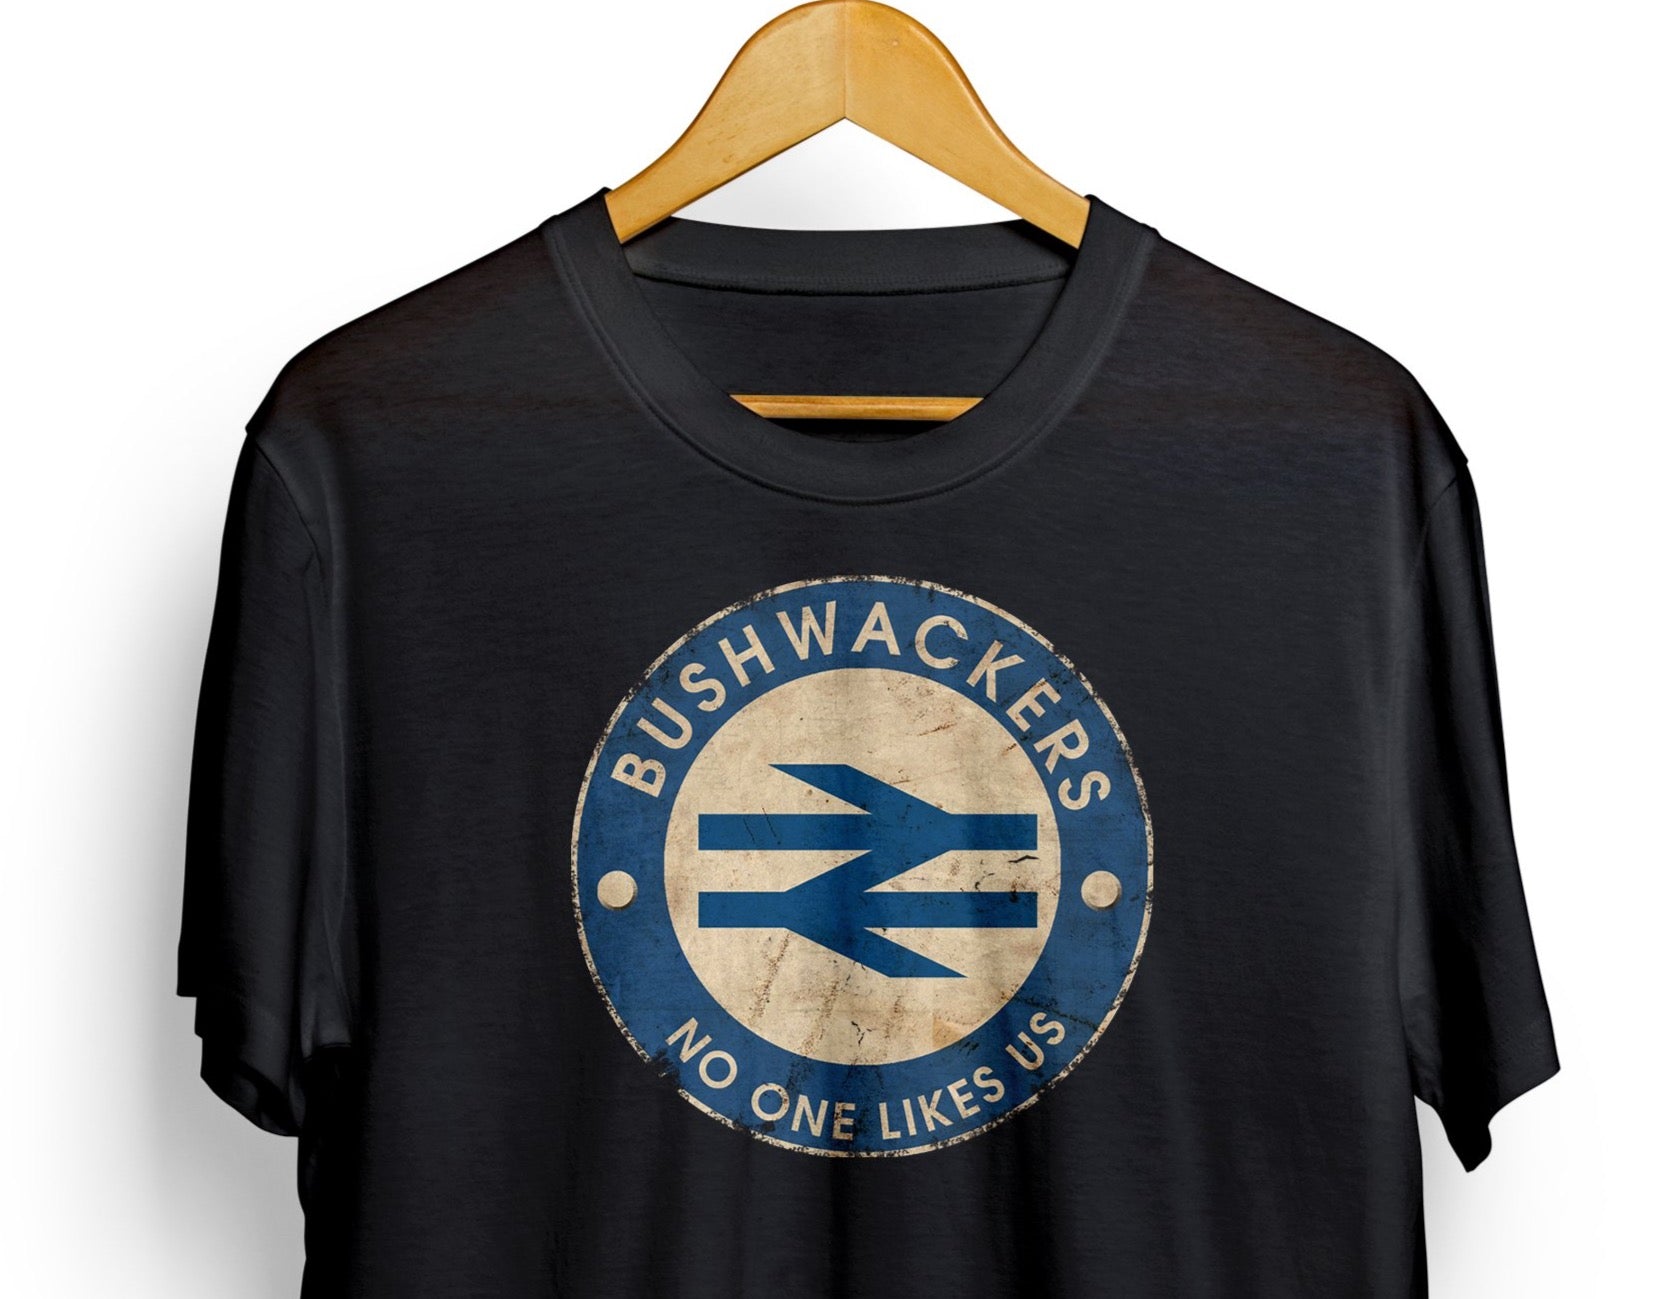 Bushwackers Football Casuals 80s Hooligan Subculture Awaydays T Shirt